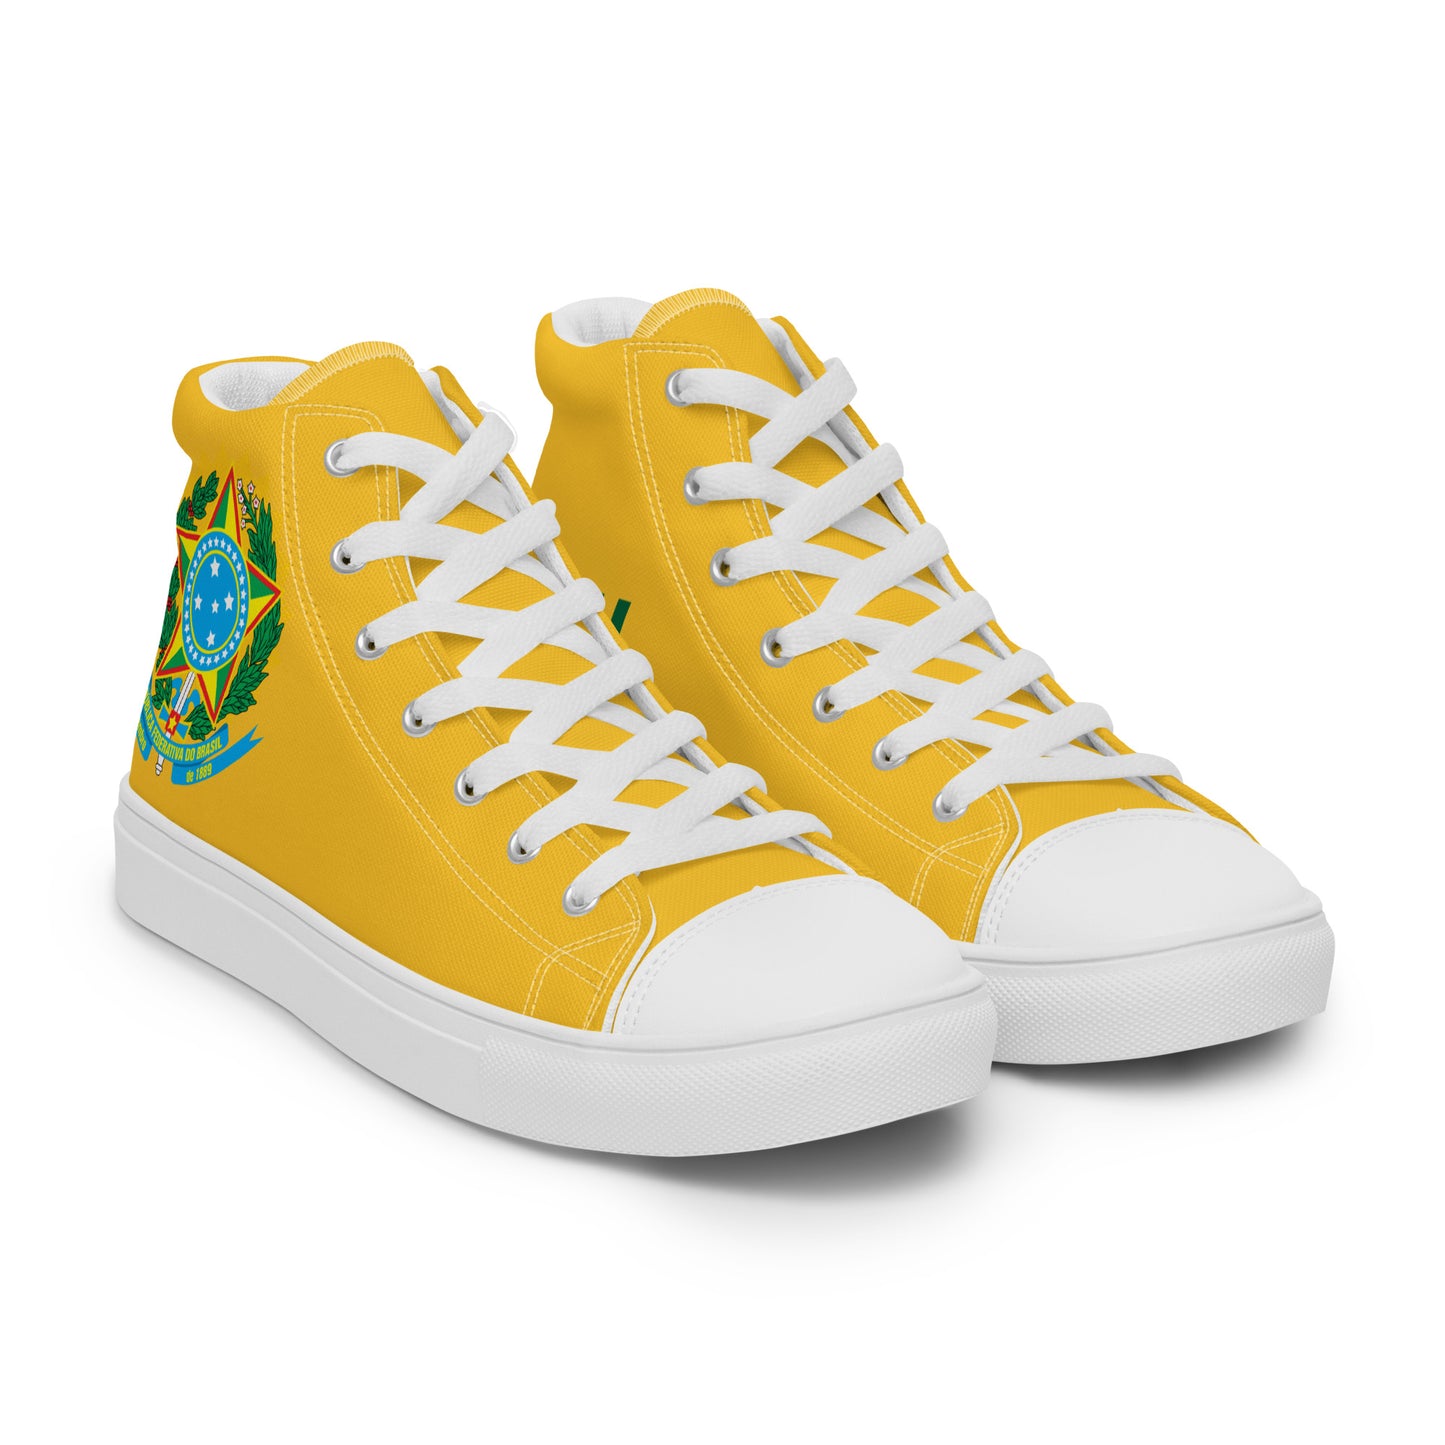 Brasil - Men - Yellow - High top shoes